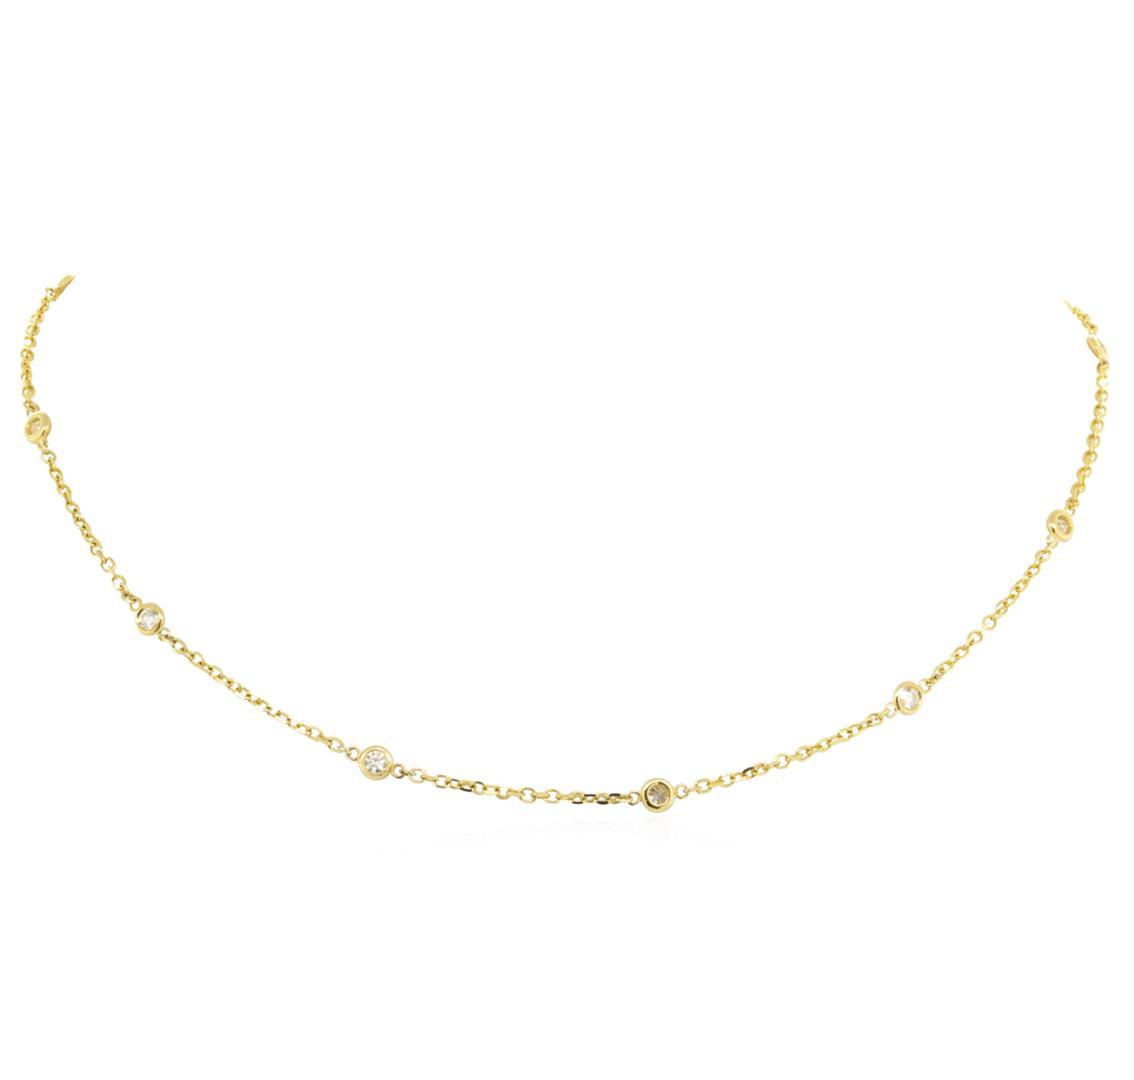 0.7 ctw Diamond Necklace - 14KT Yellow Gold